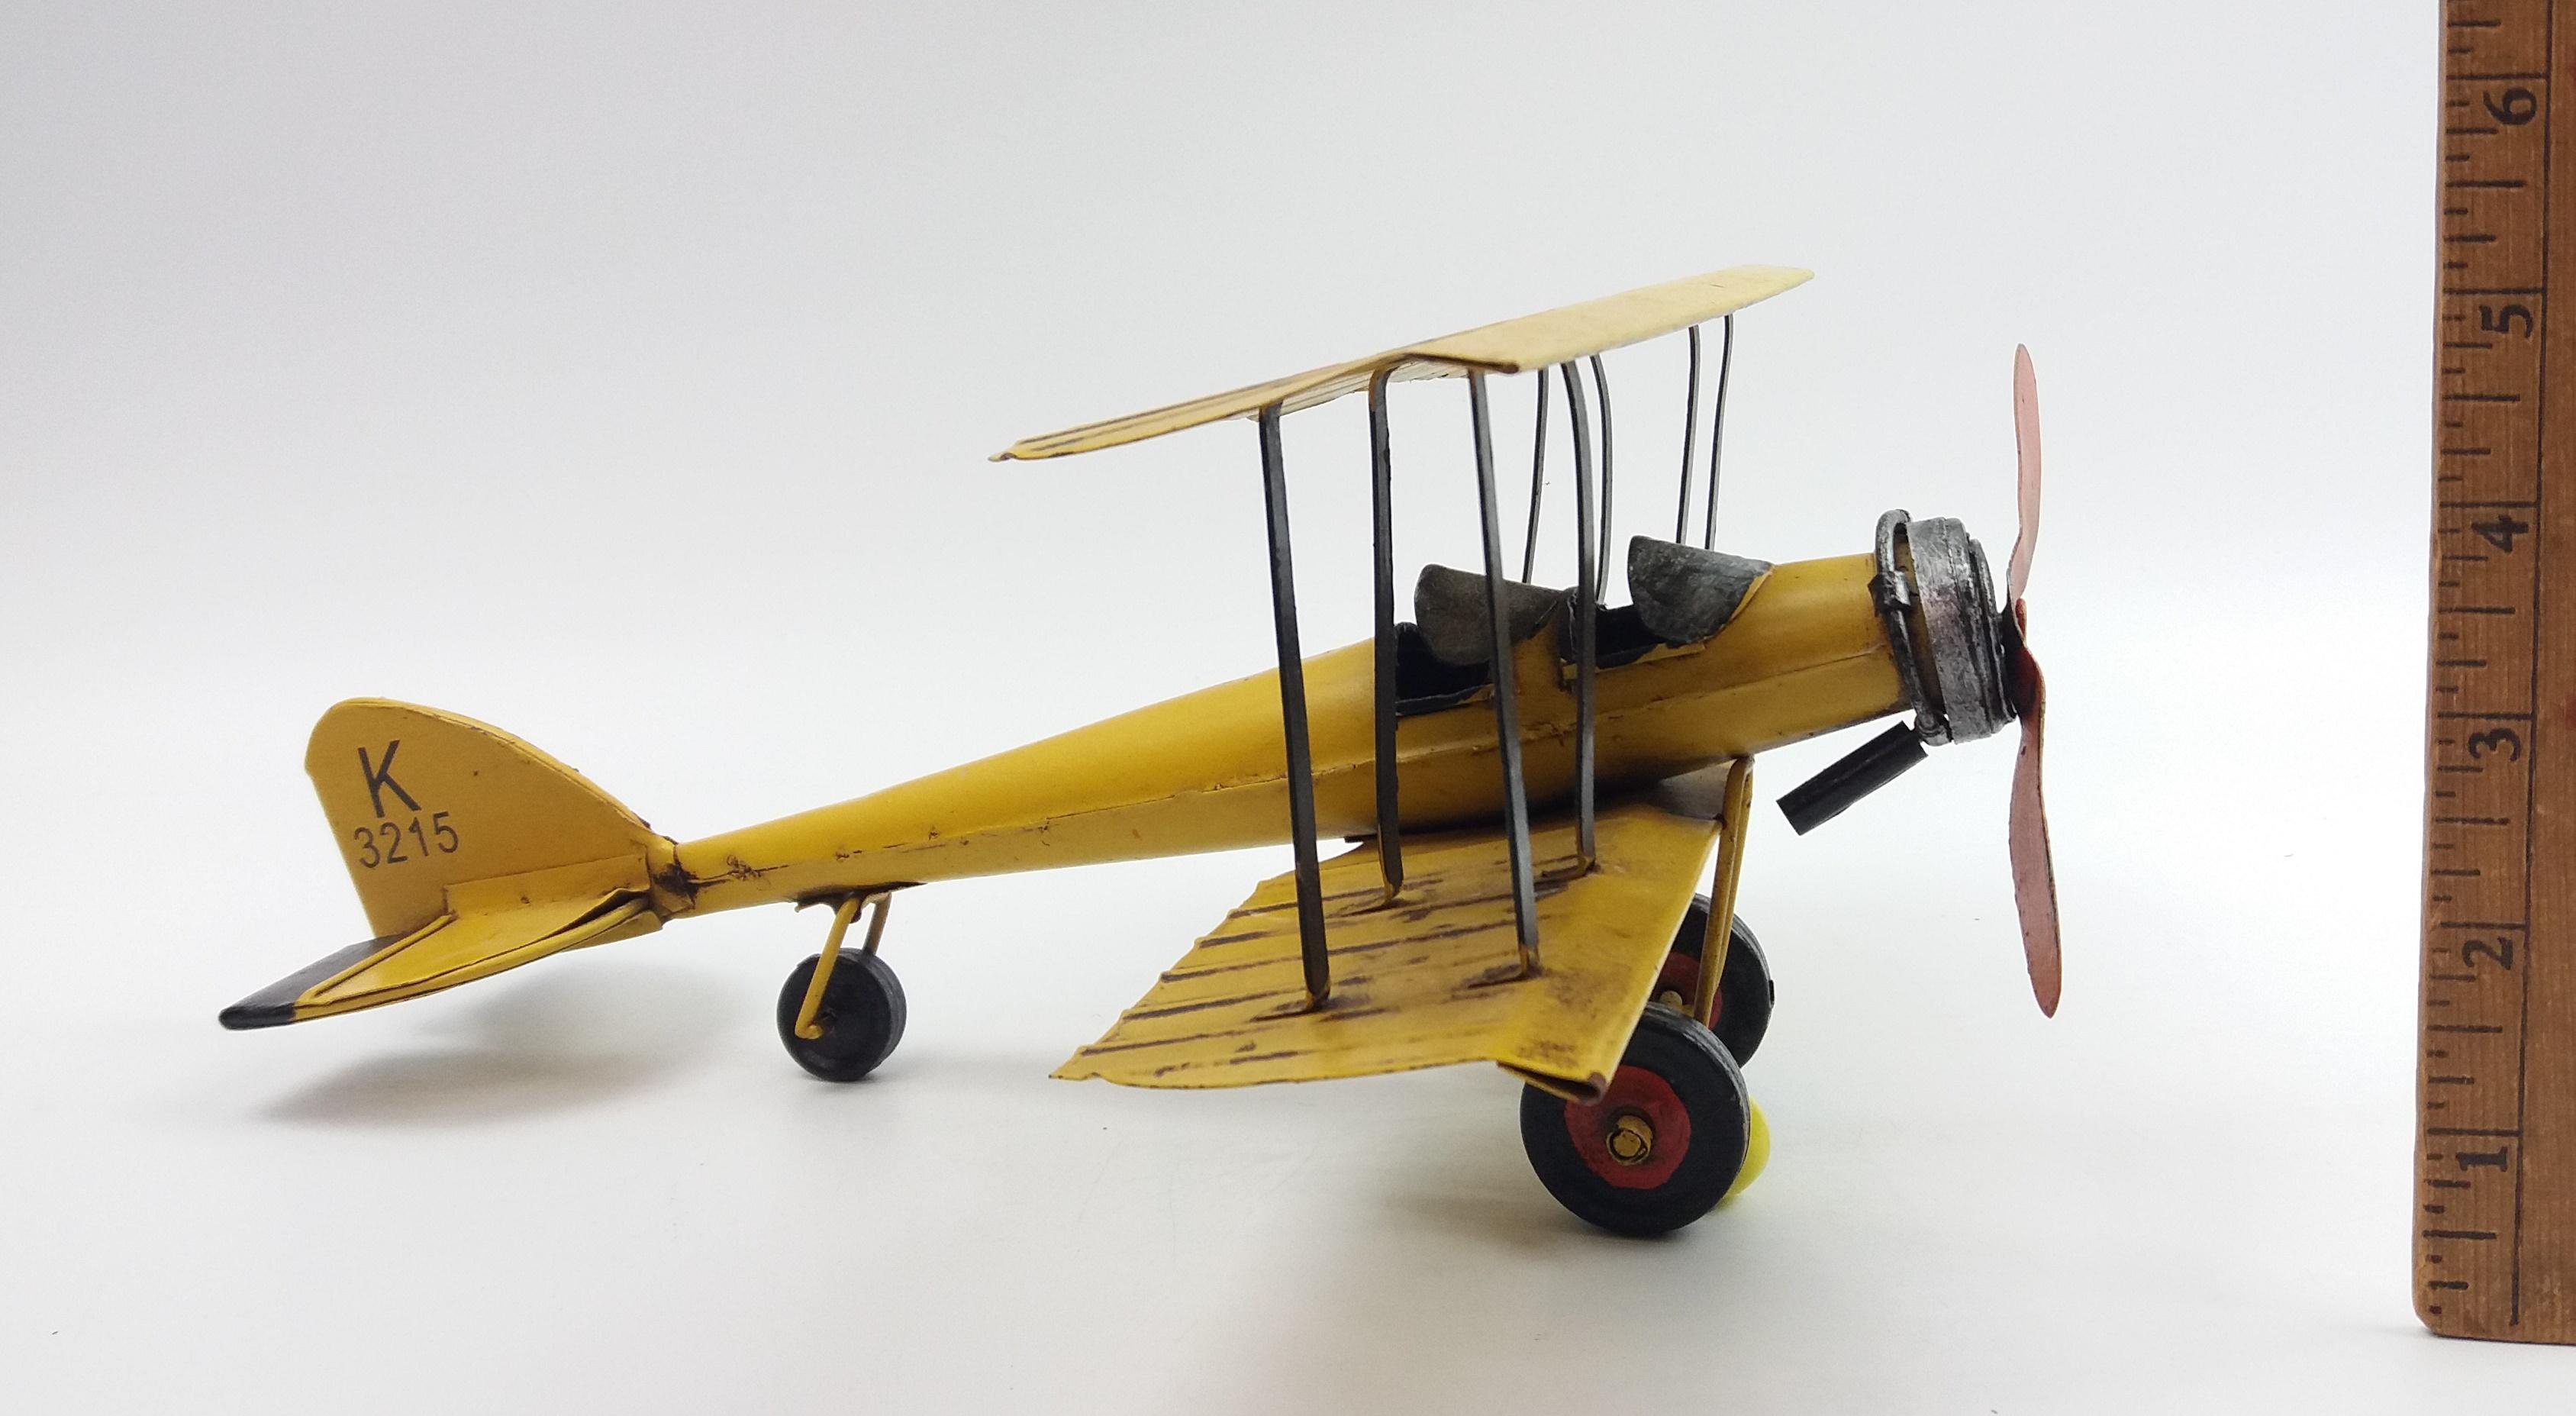 Vintage Tin Litho WWII Biplane Aircraft Metal Model